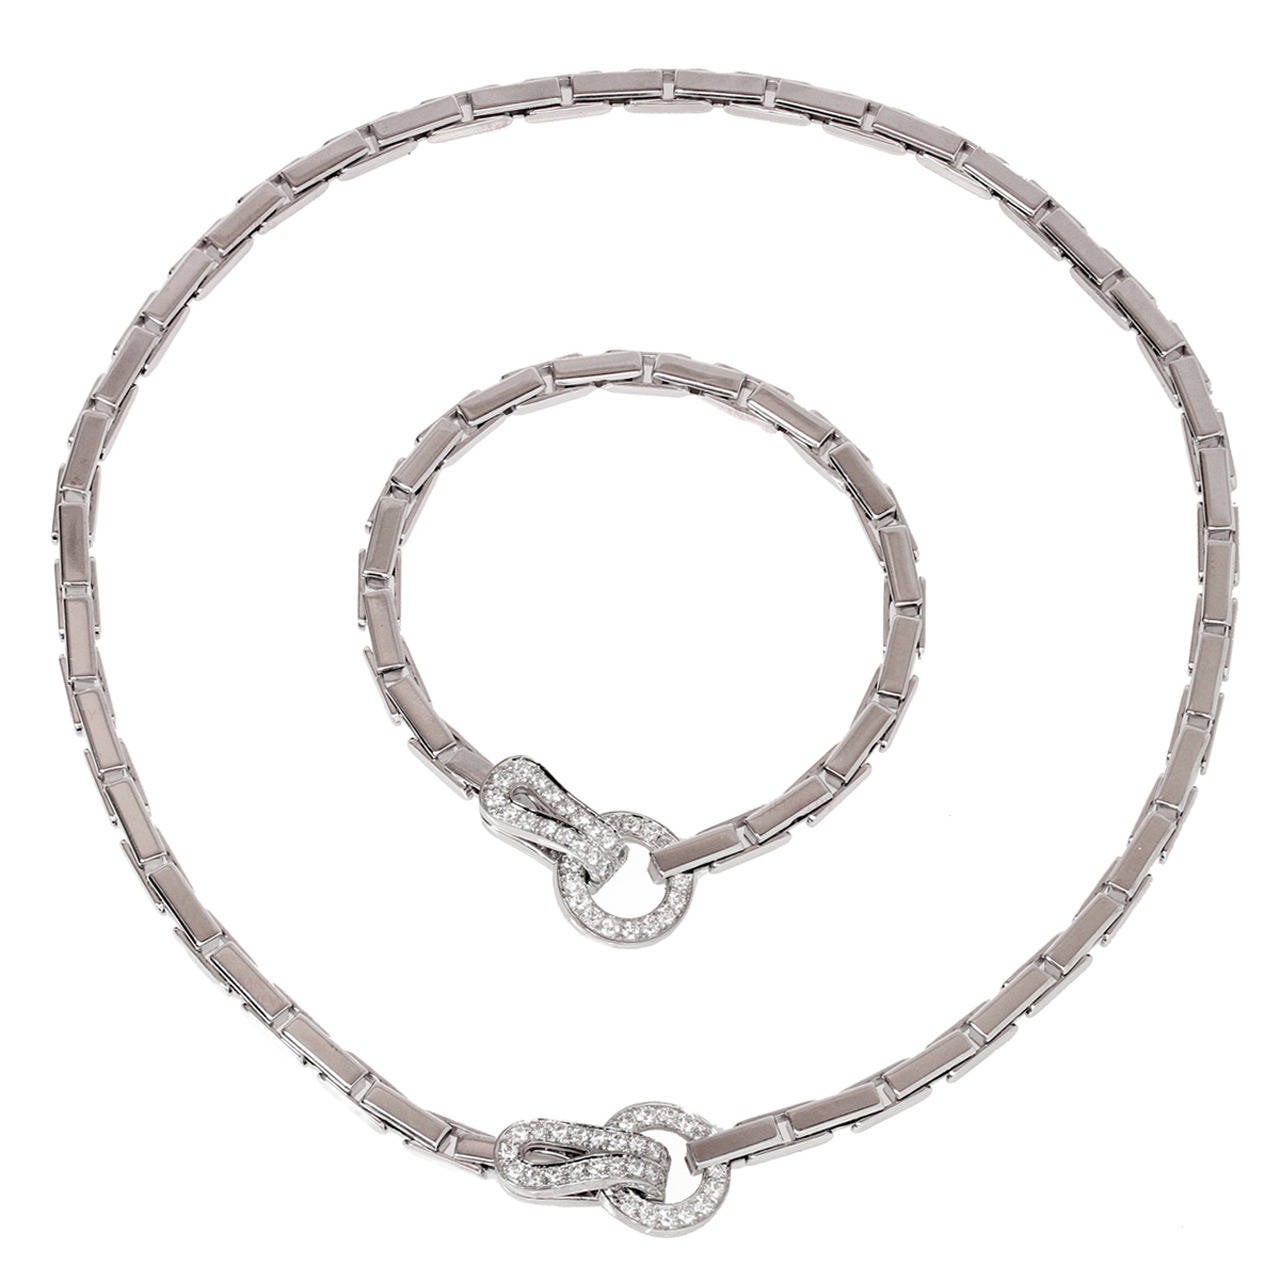 Cartier Agrafe Diamond Gold Necklace and Bracelet